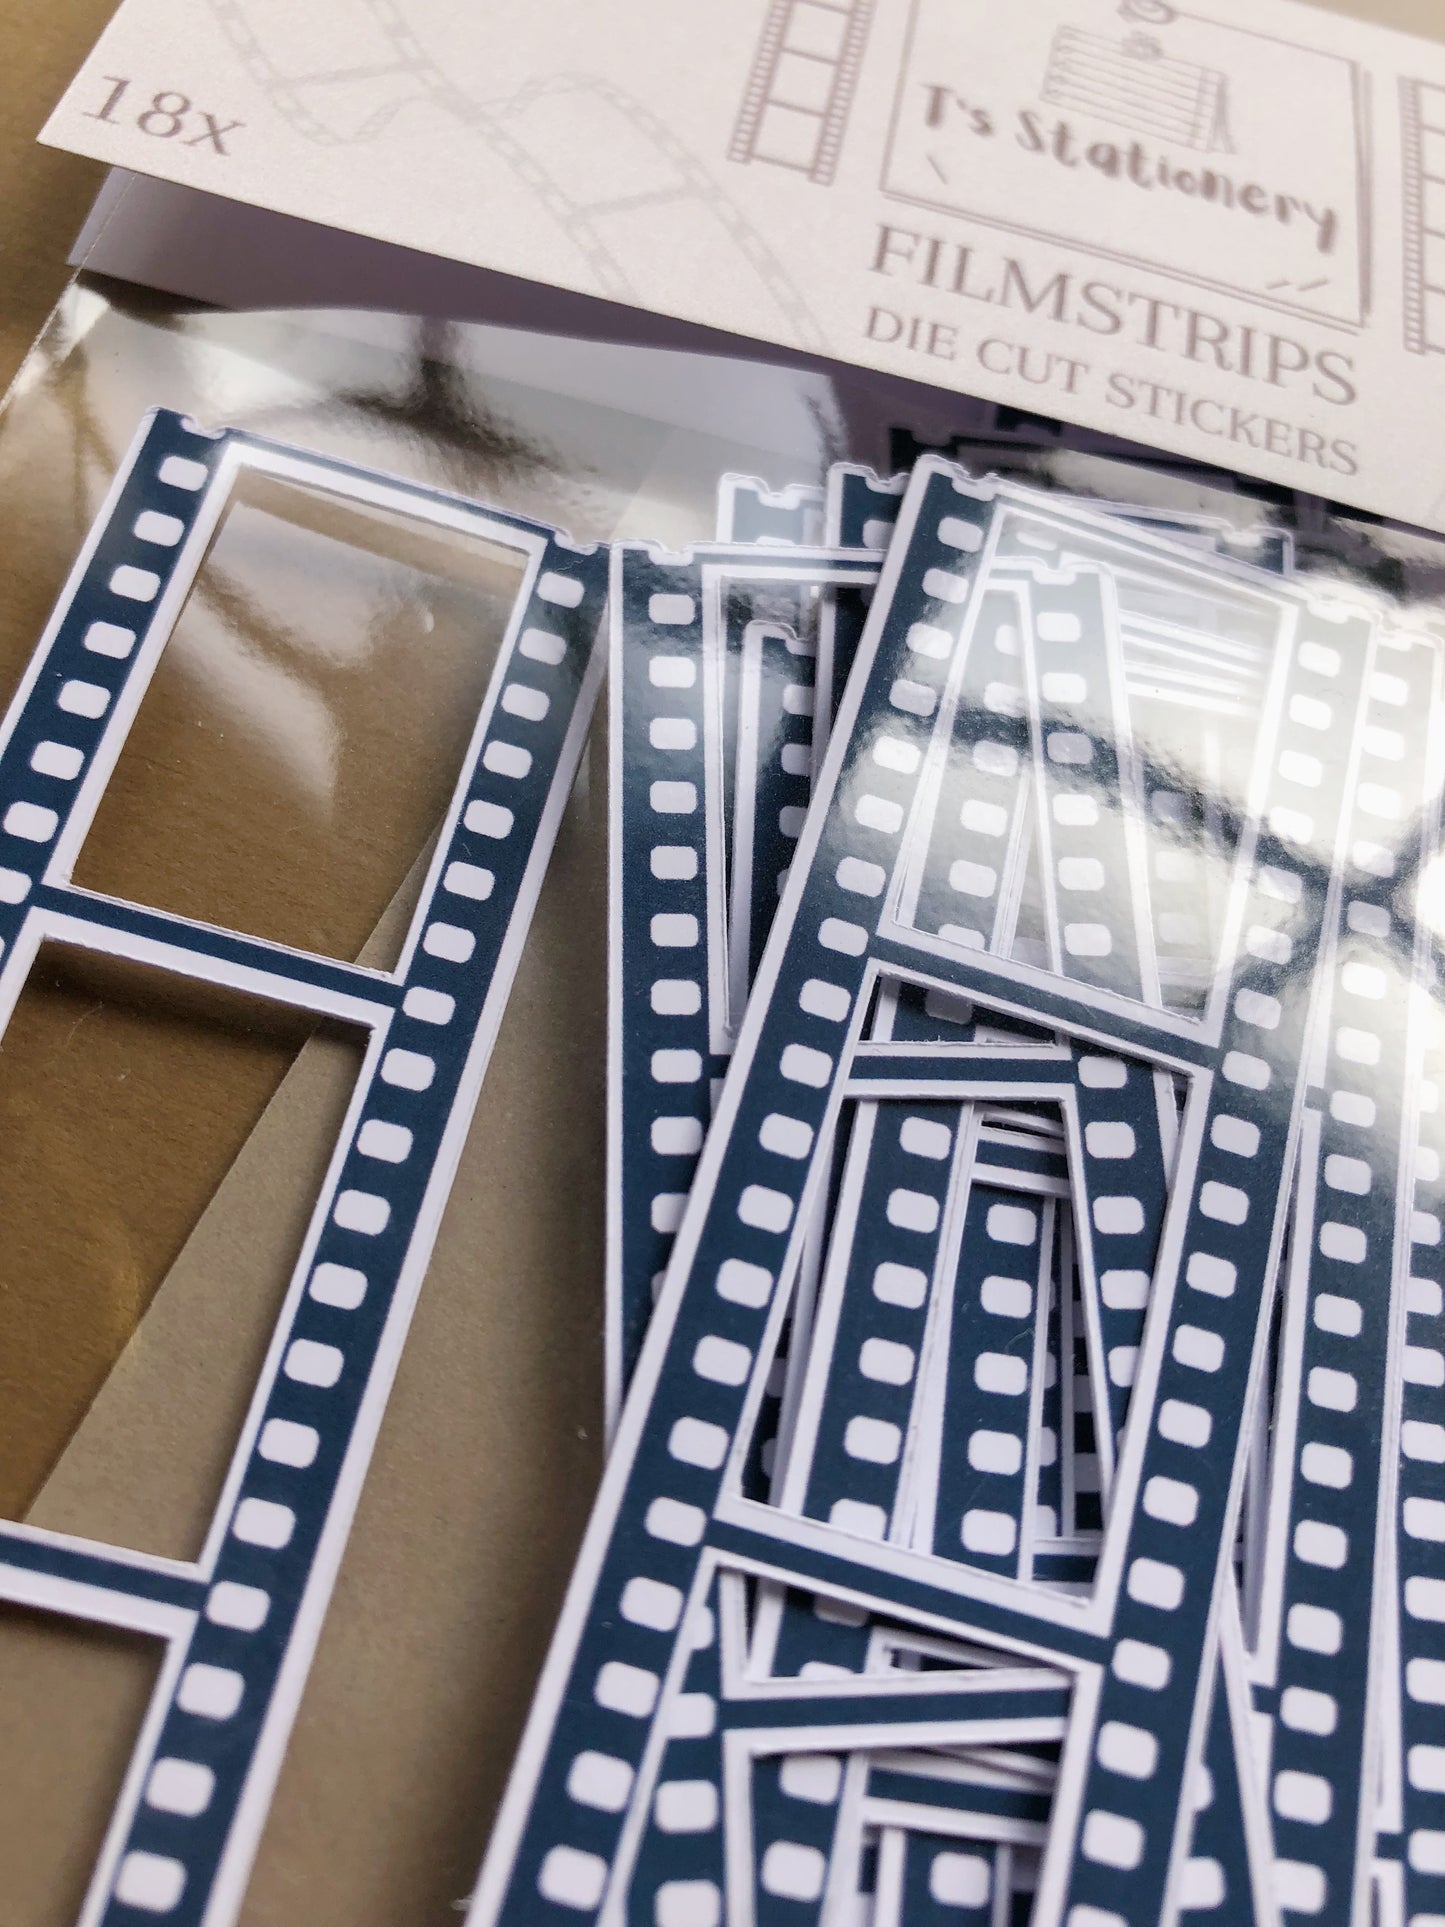 "18Pcs Navy Blue Film Strip Die Cut Stickers"